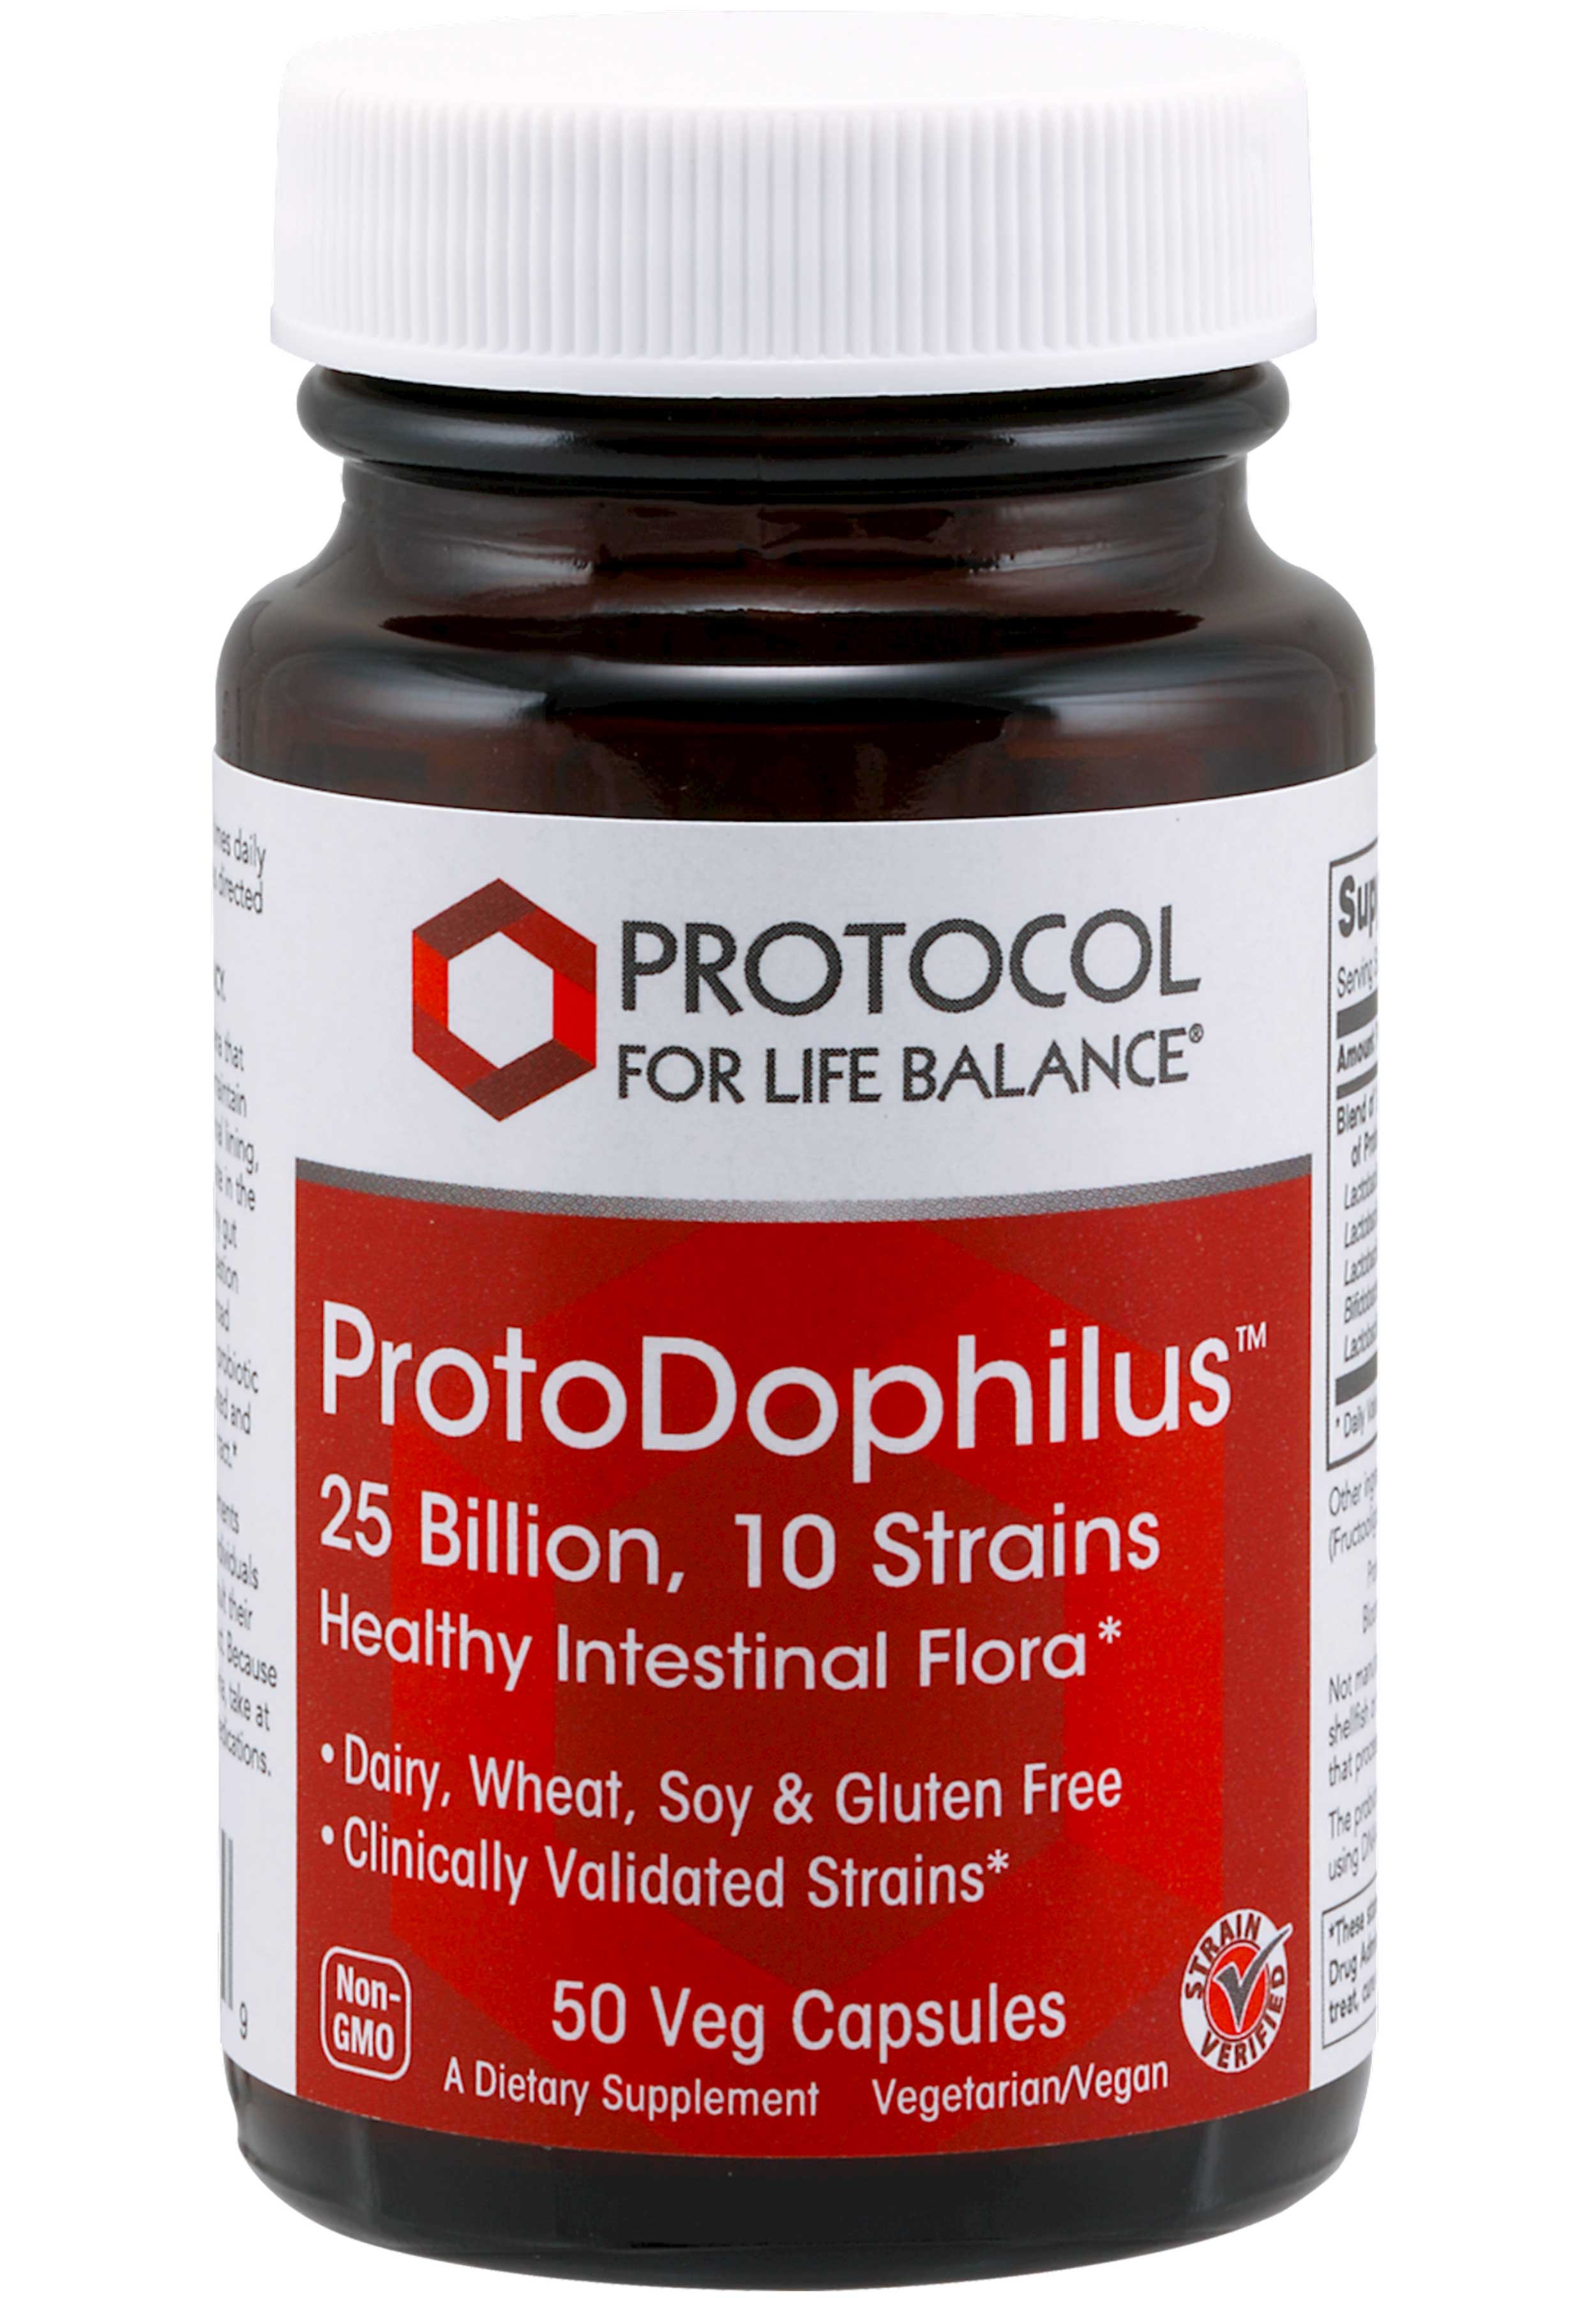 Protocol for Life Balance ProtoDophilus 25 Billion, 10 Strains